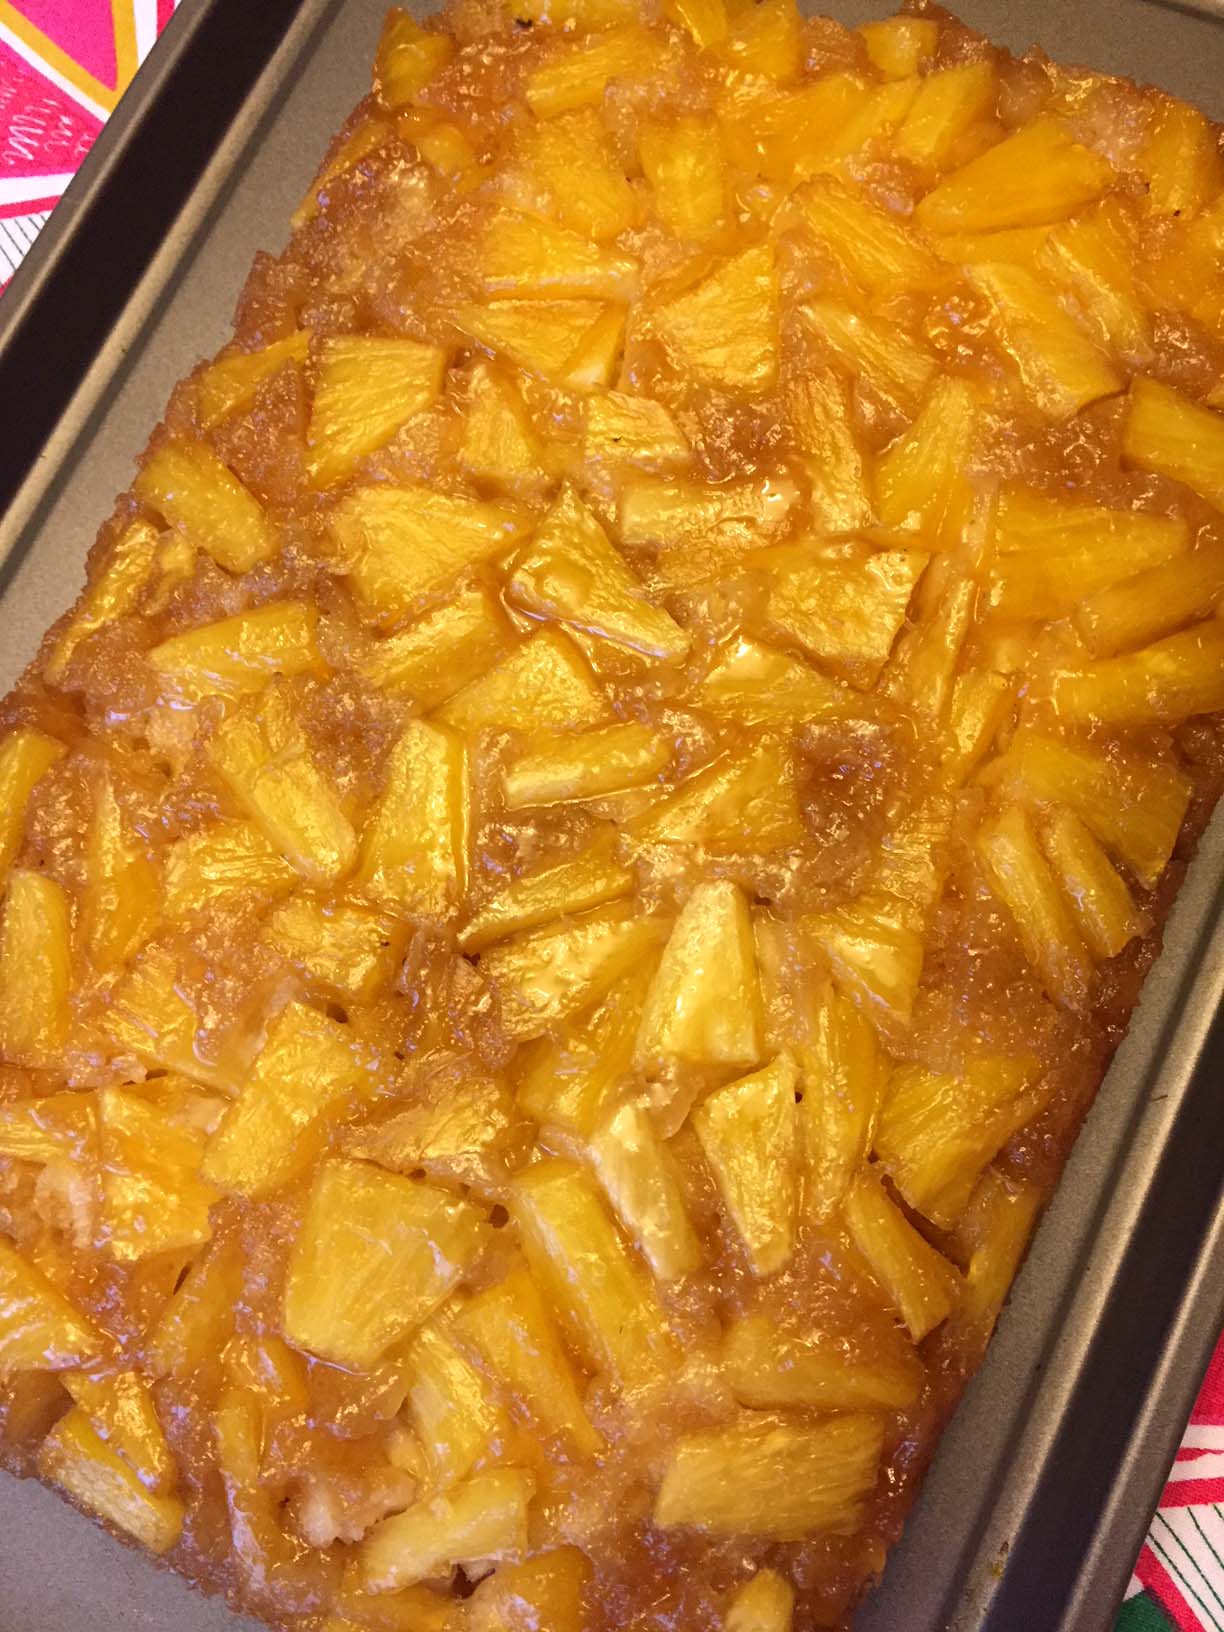 https://www.melaniecooks.com/wp-content/uploads/2018/05/pineapple_upside_down_cake_recipe_fresh.jpg